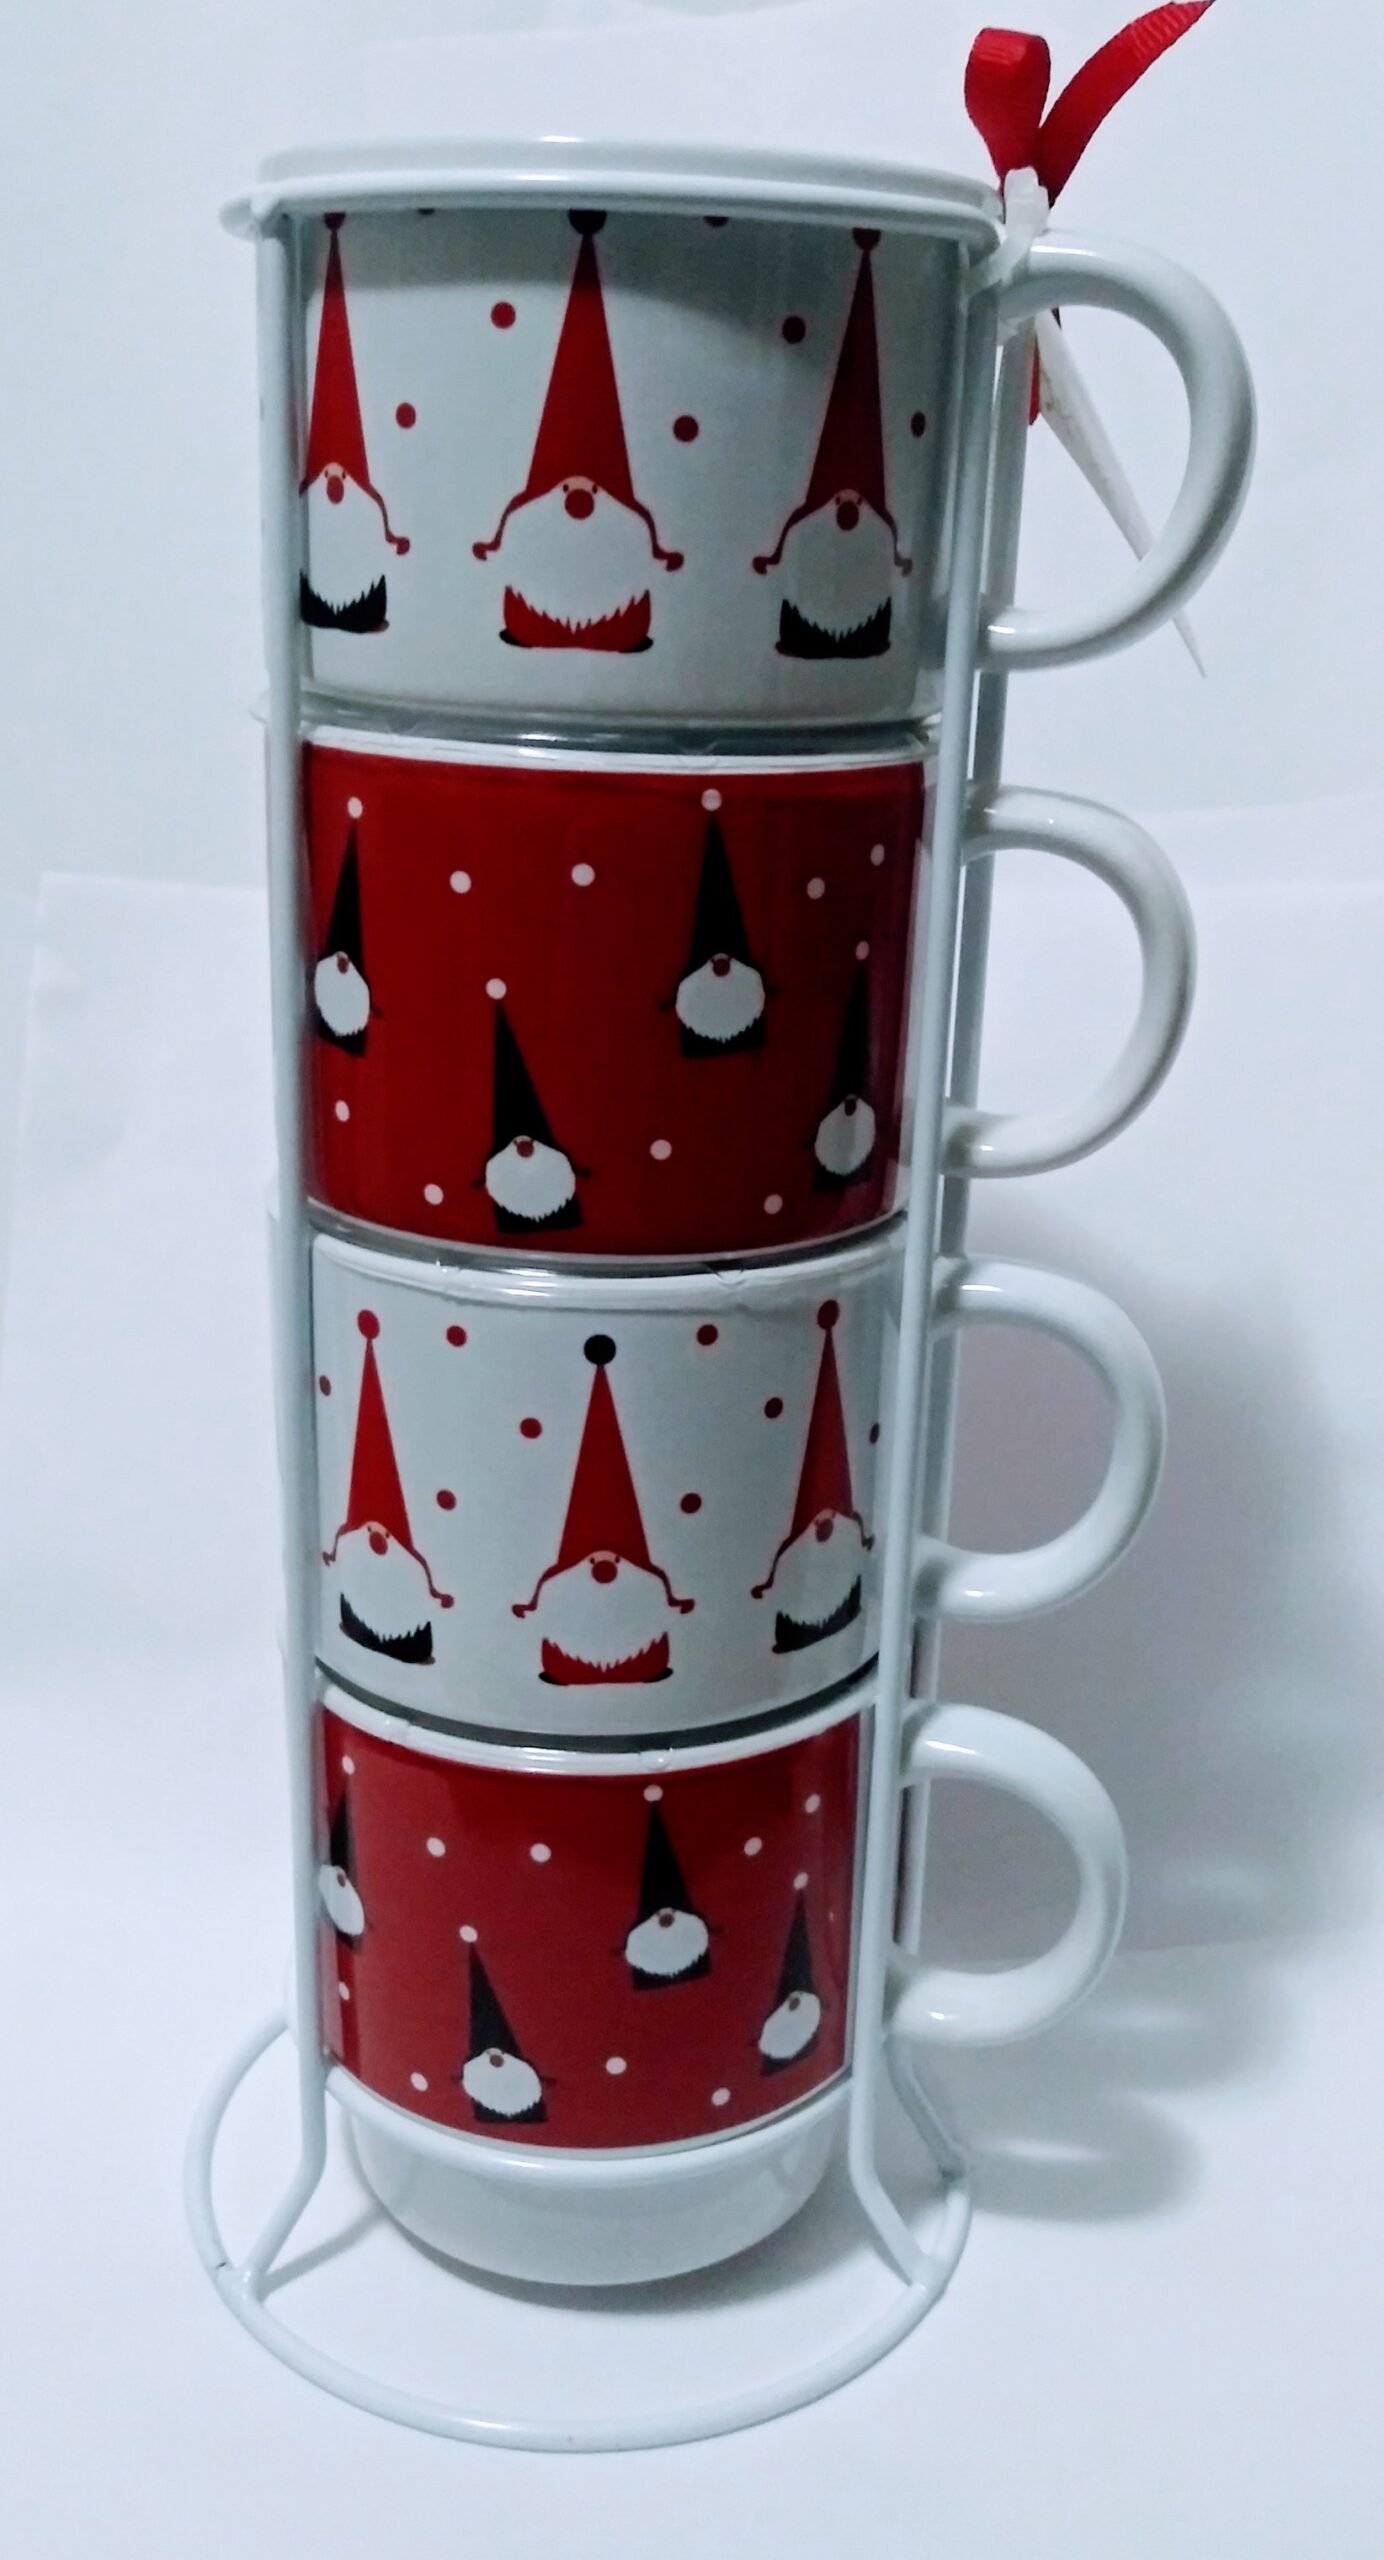 Set of 4 Coffee Break Tower Mugs Holiday Design Jingles and Joy